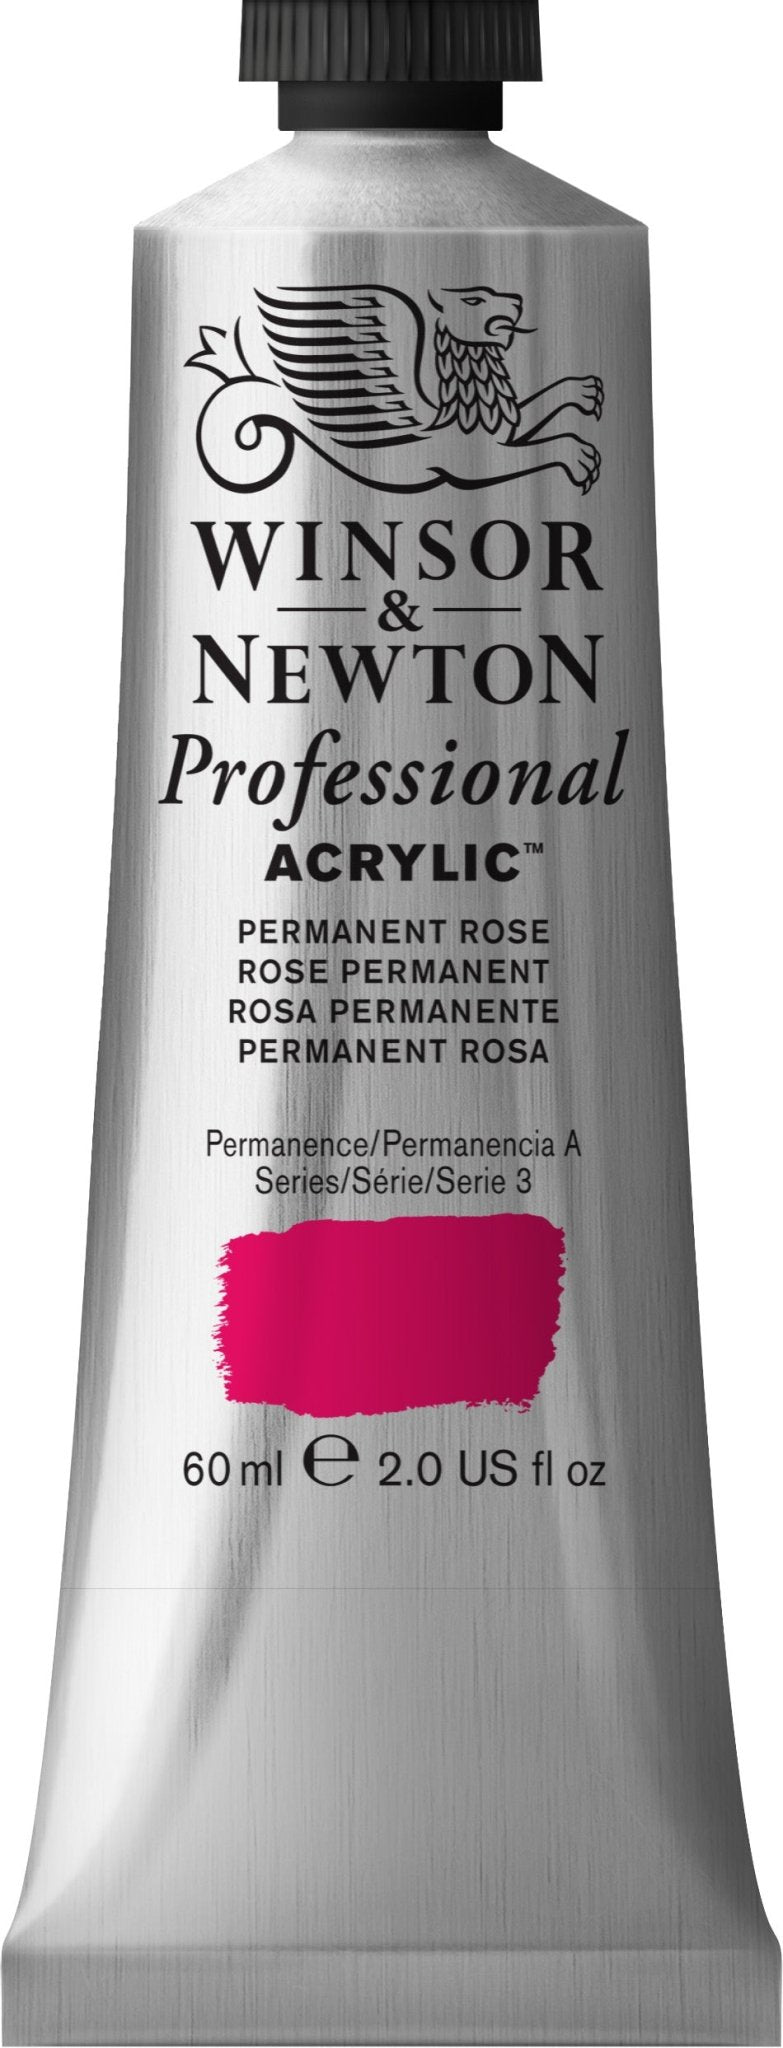 W & N Professional Acrylic 60ml Permanent Rose Quinacridone - theartshop.com.au